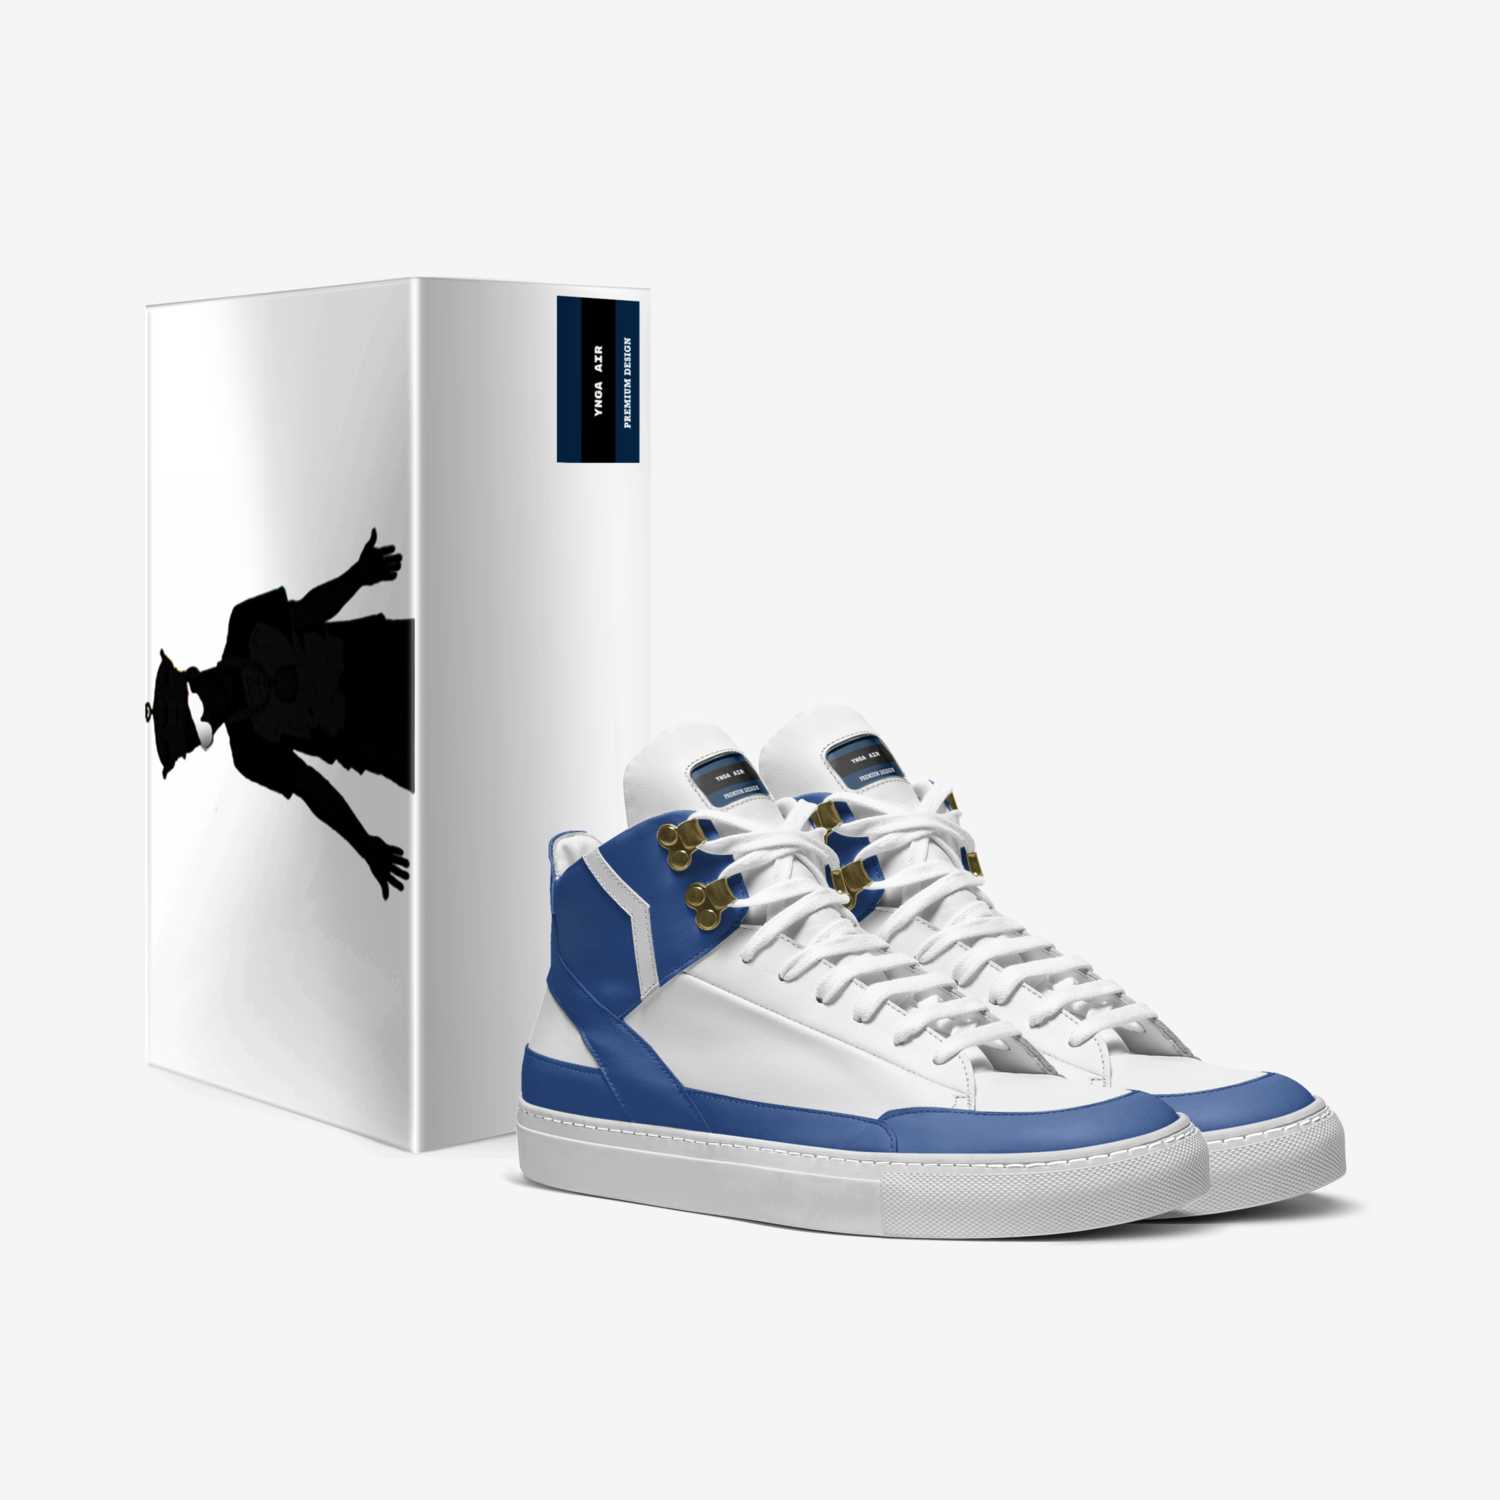 YNGA AIR custom made in Italy shoes by Antonio Jackson | Box view